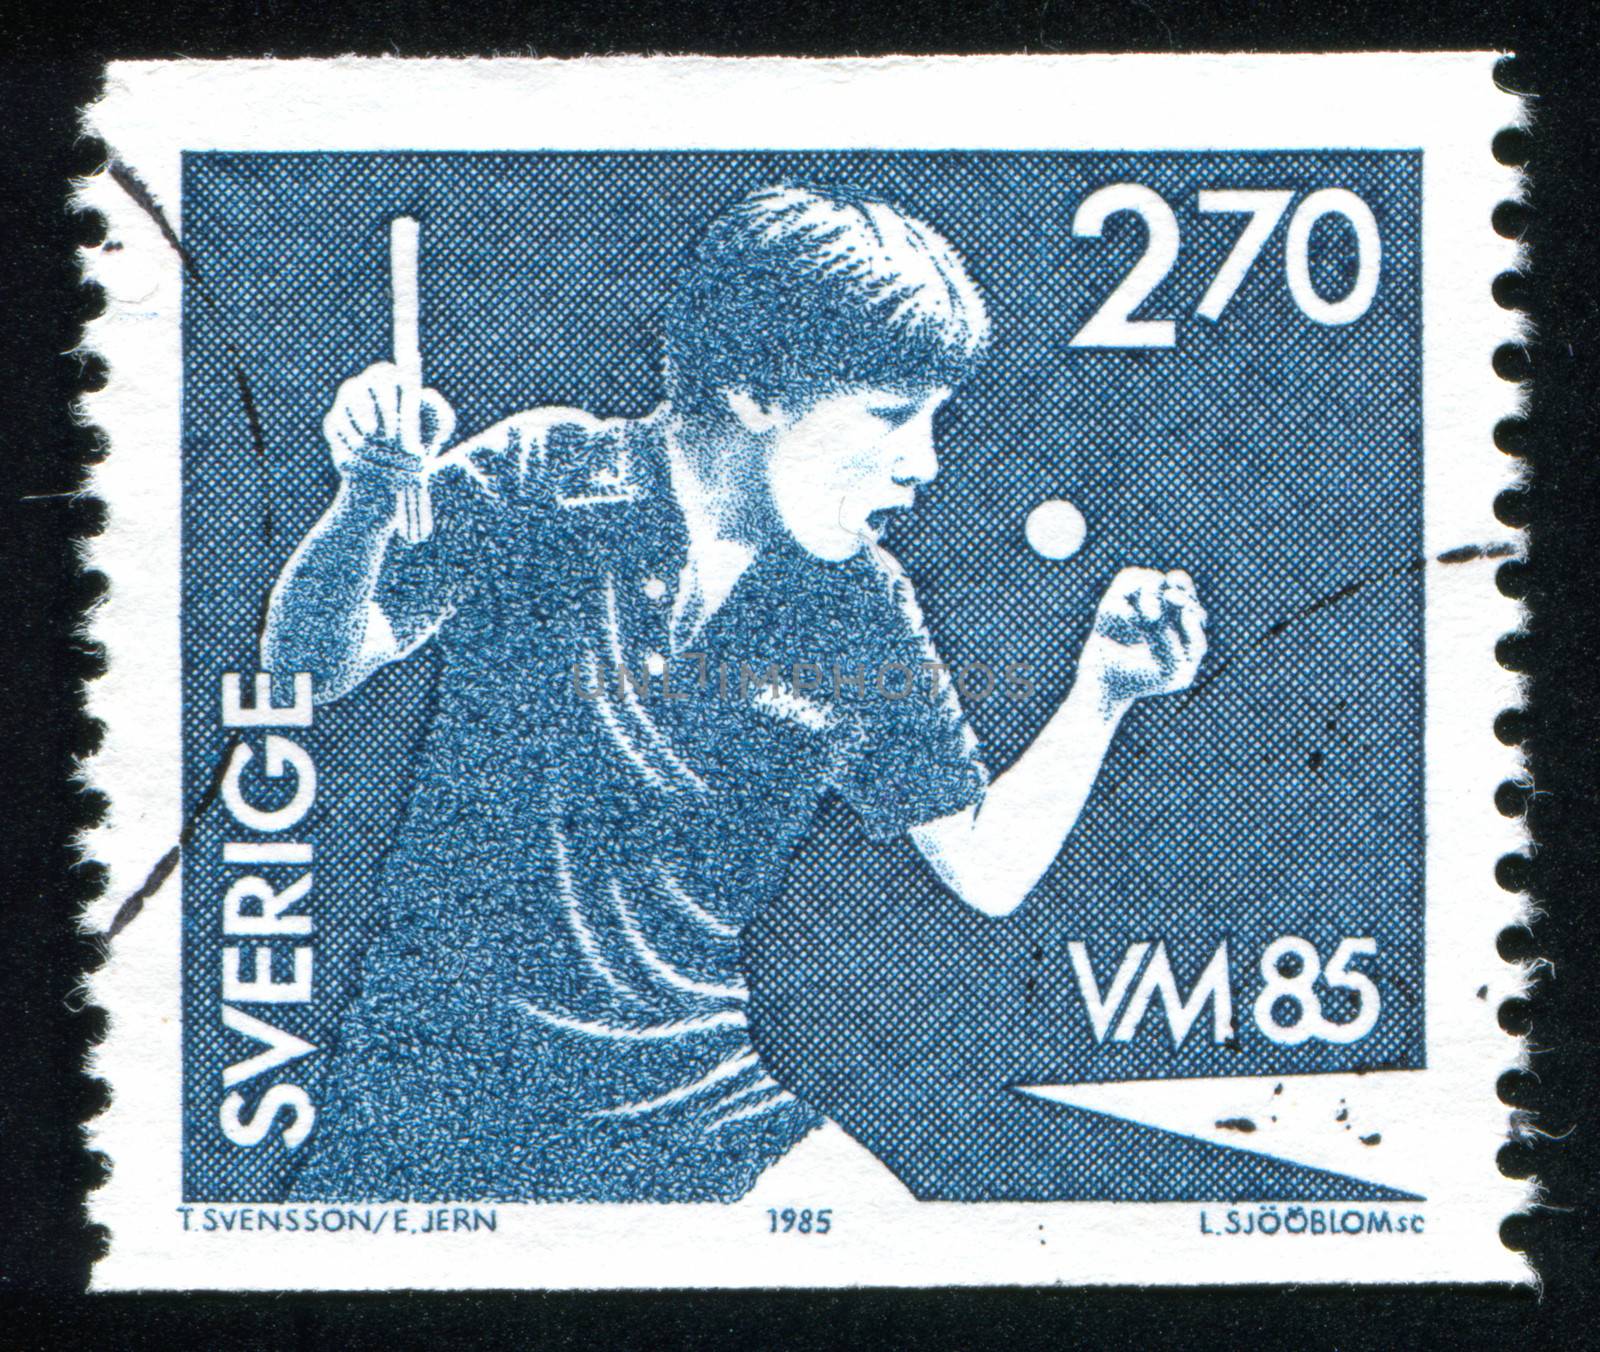 SWEDEN - CIRCA 1985: stamp printed by Sweden, shows Jan-Ove Waldner, circa 1985